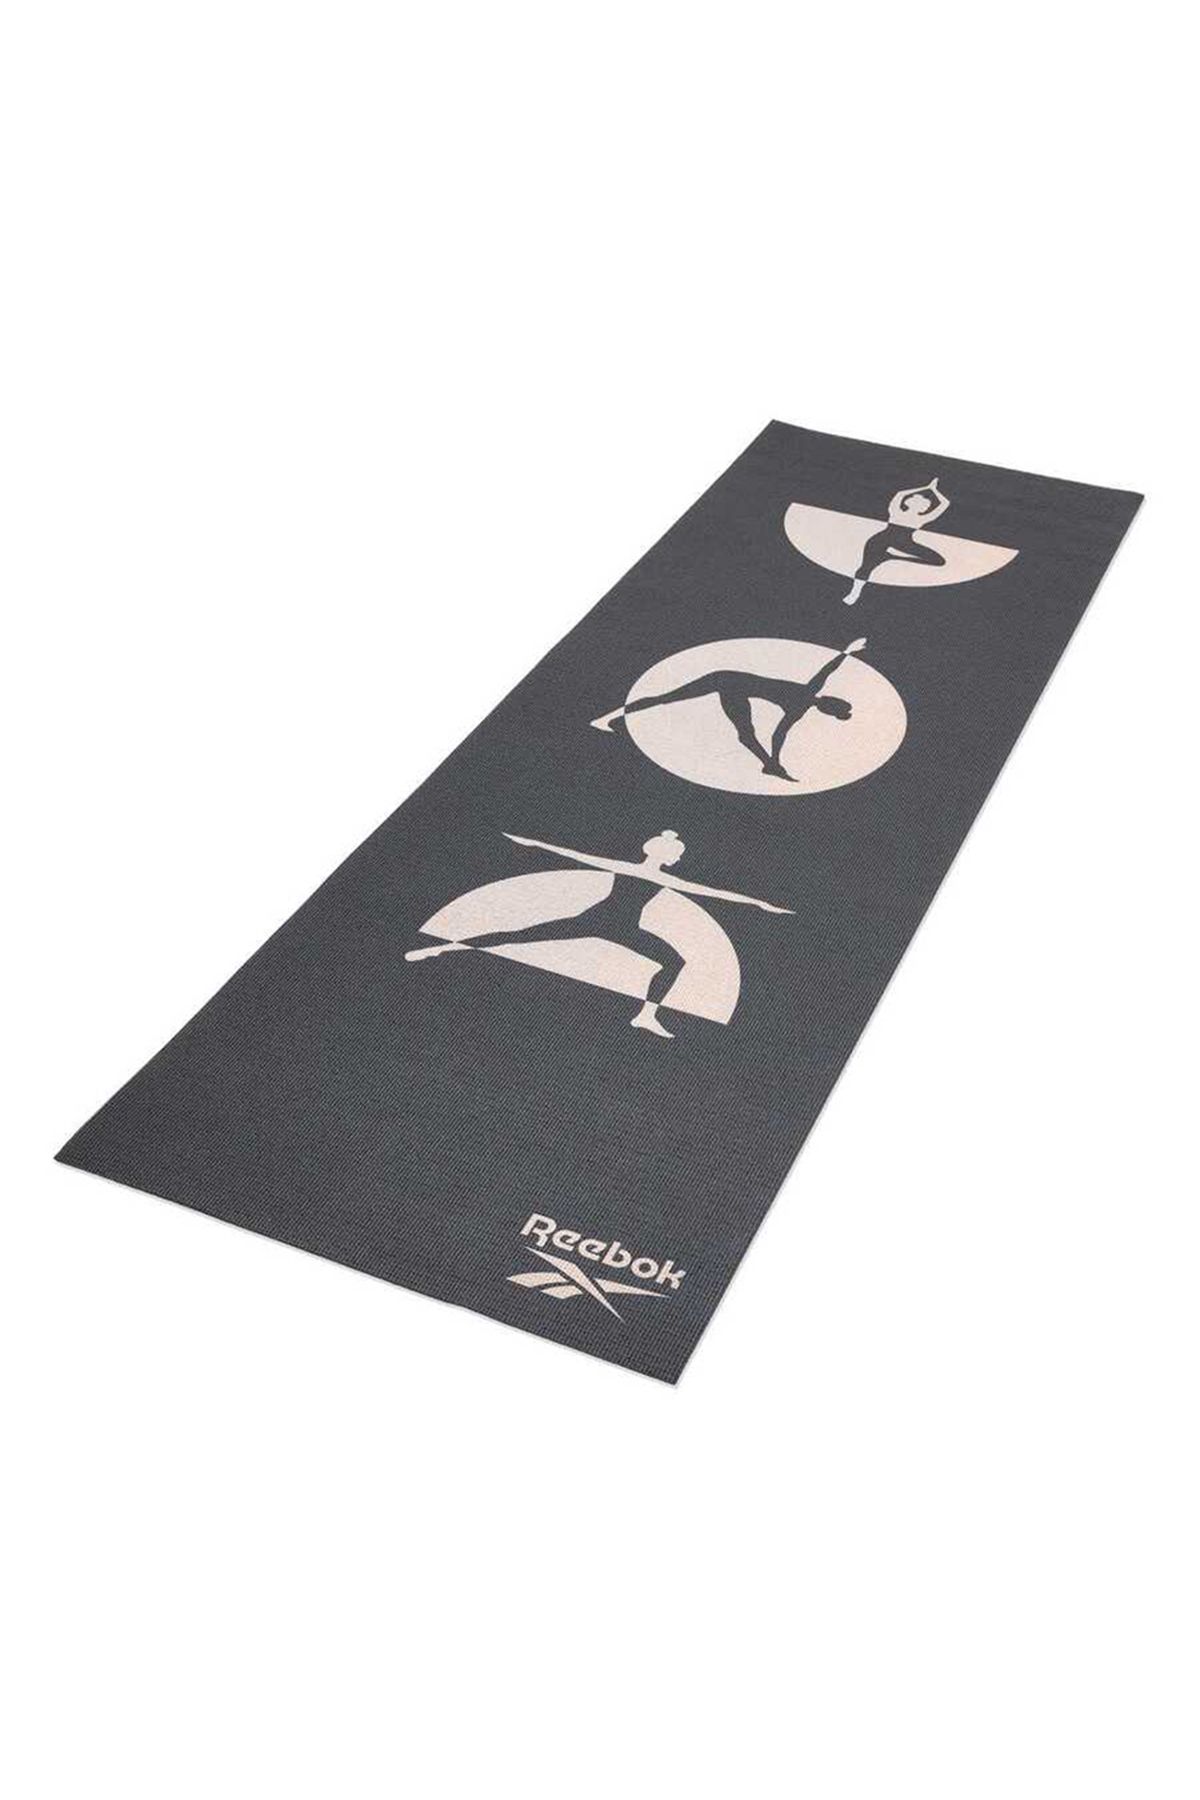 Reebok RAYG-11023PE Yoga Mat